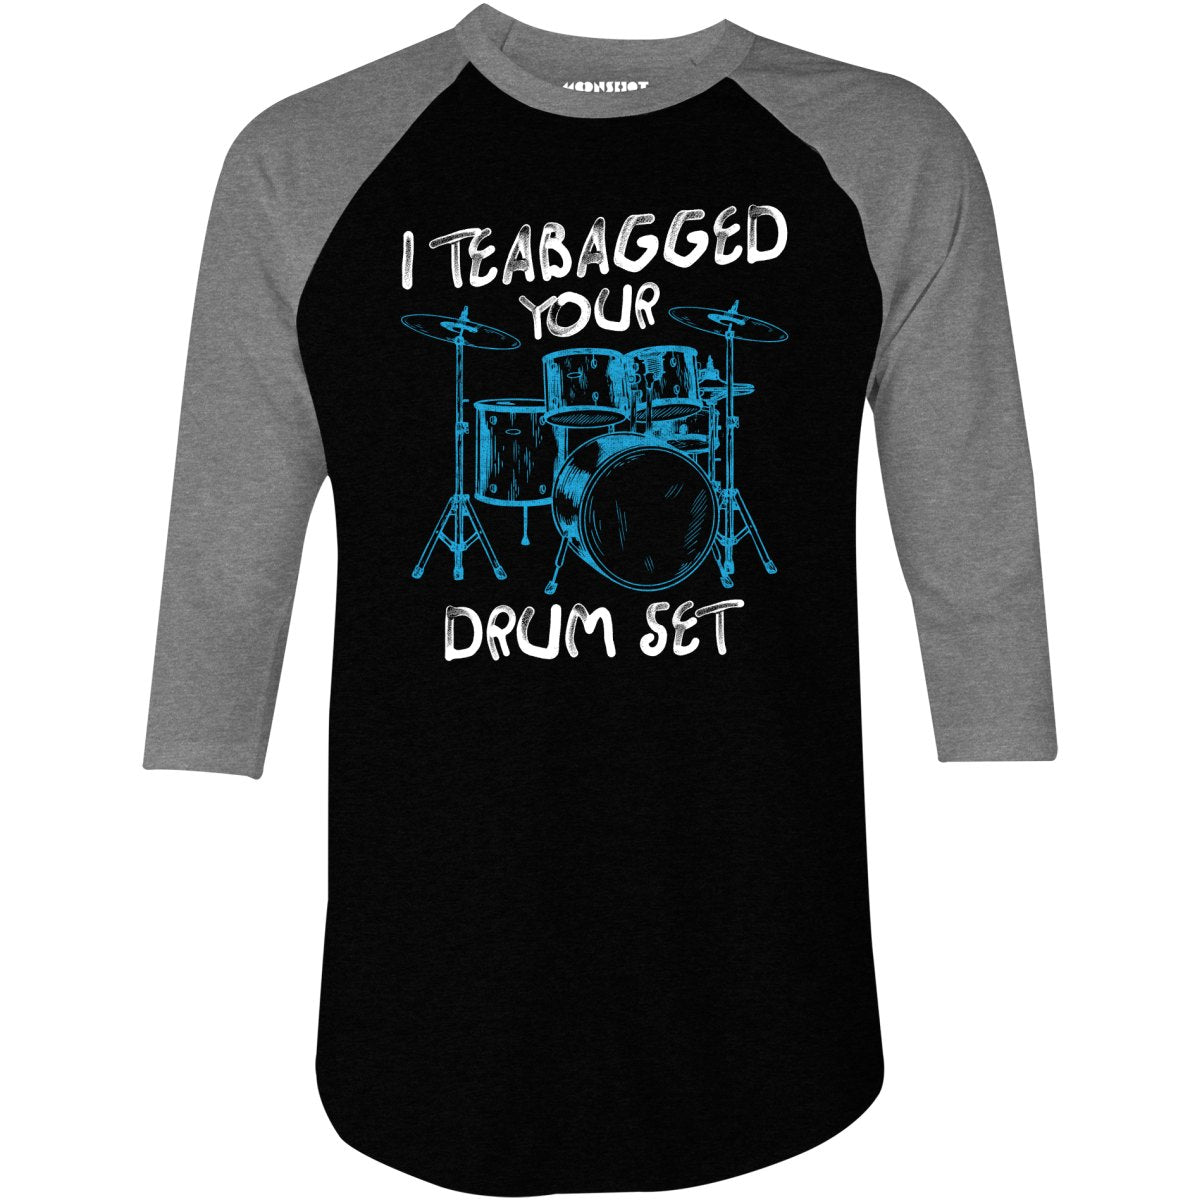 I Teabagged Your Drum Set - 3/4 Sleeve Raglan T-Shirt